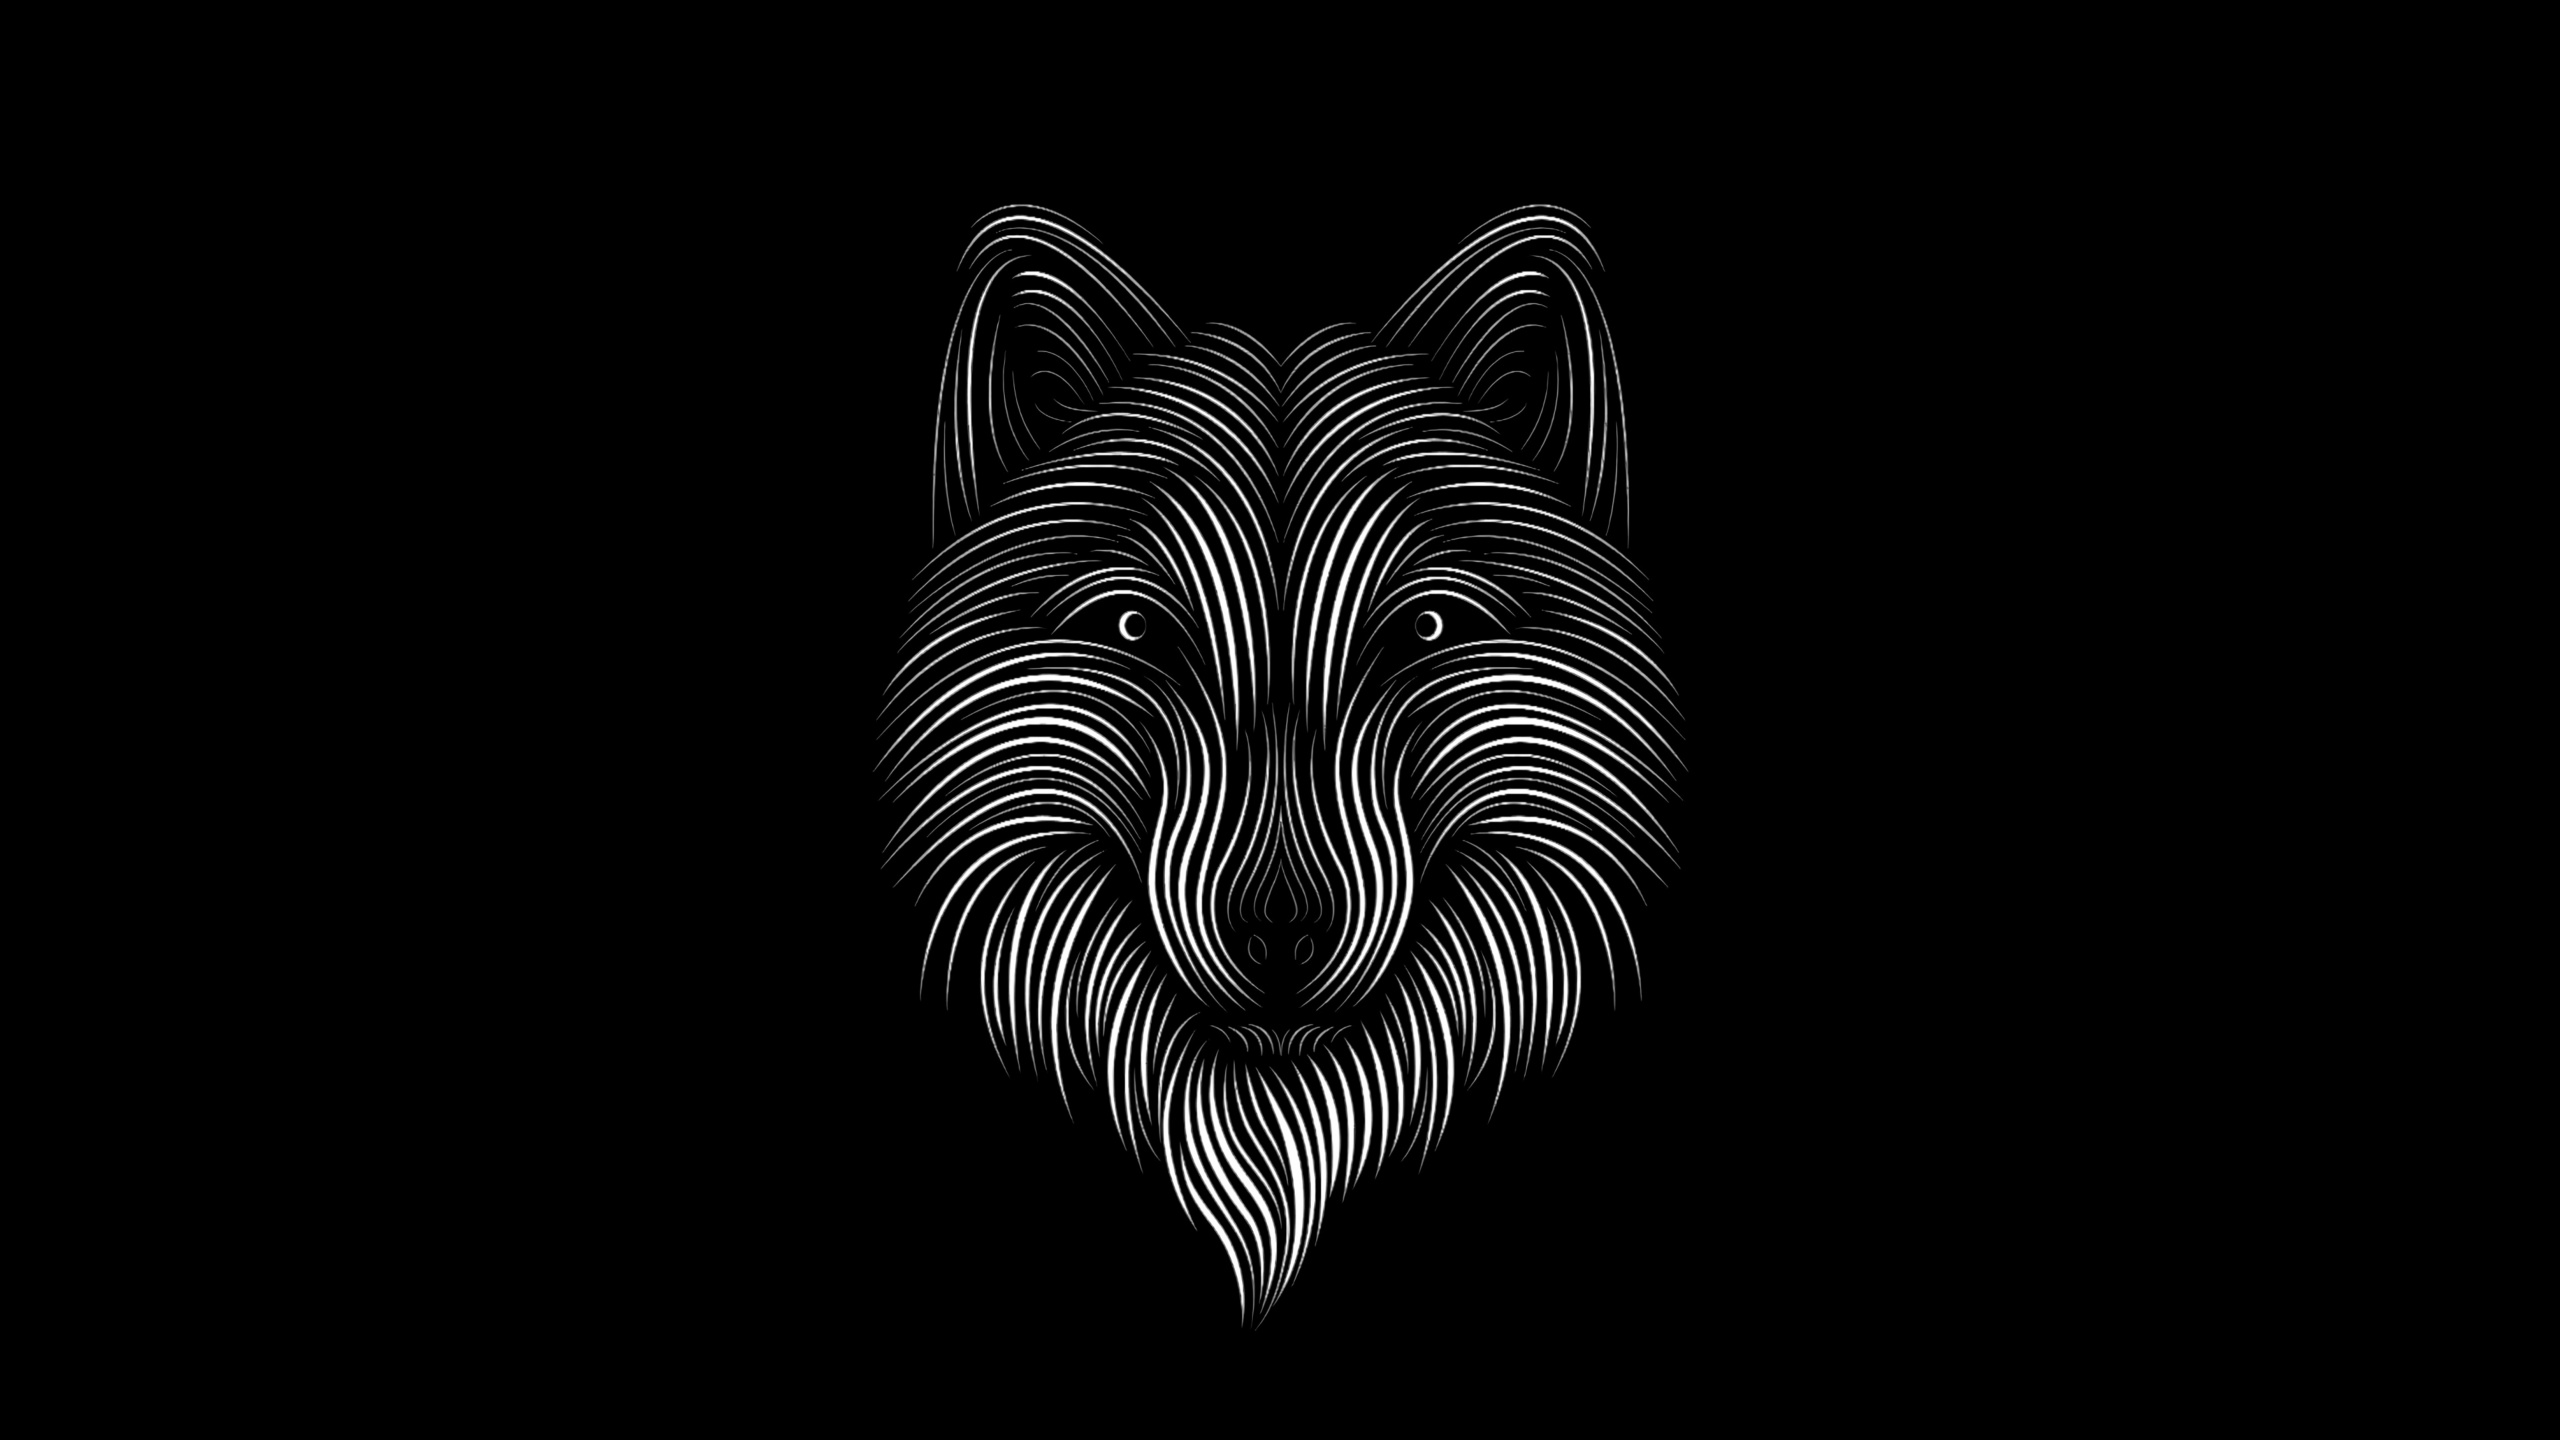 Black and White Zebra Illustration. Wallpaper in 2560x1440 Resolution